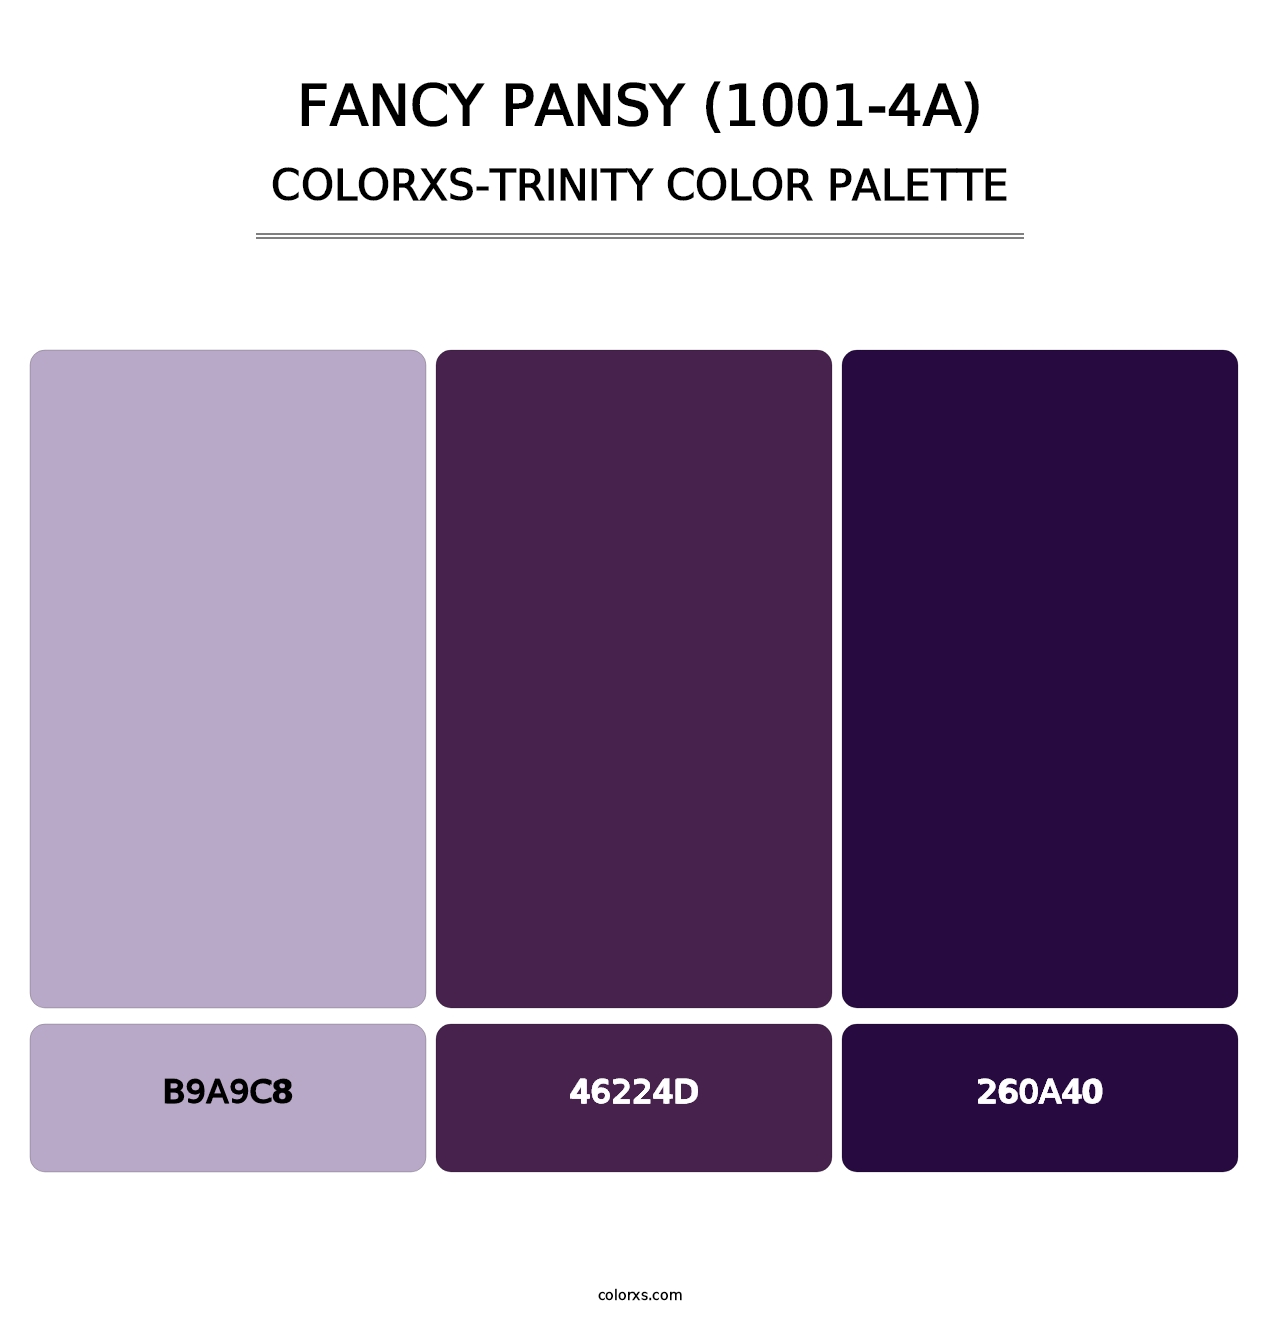 Fancy Pansy (1001-4A) - Colorxs Trinity Palette